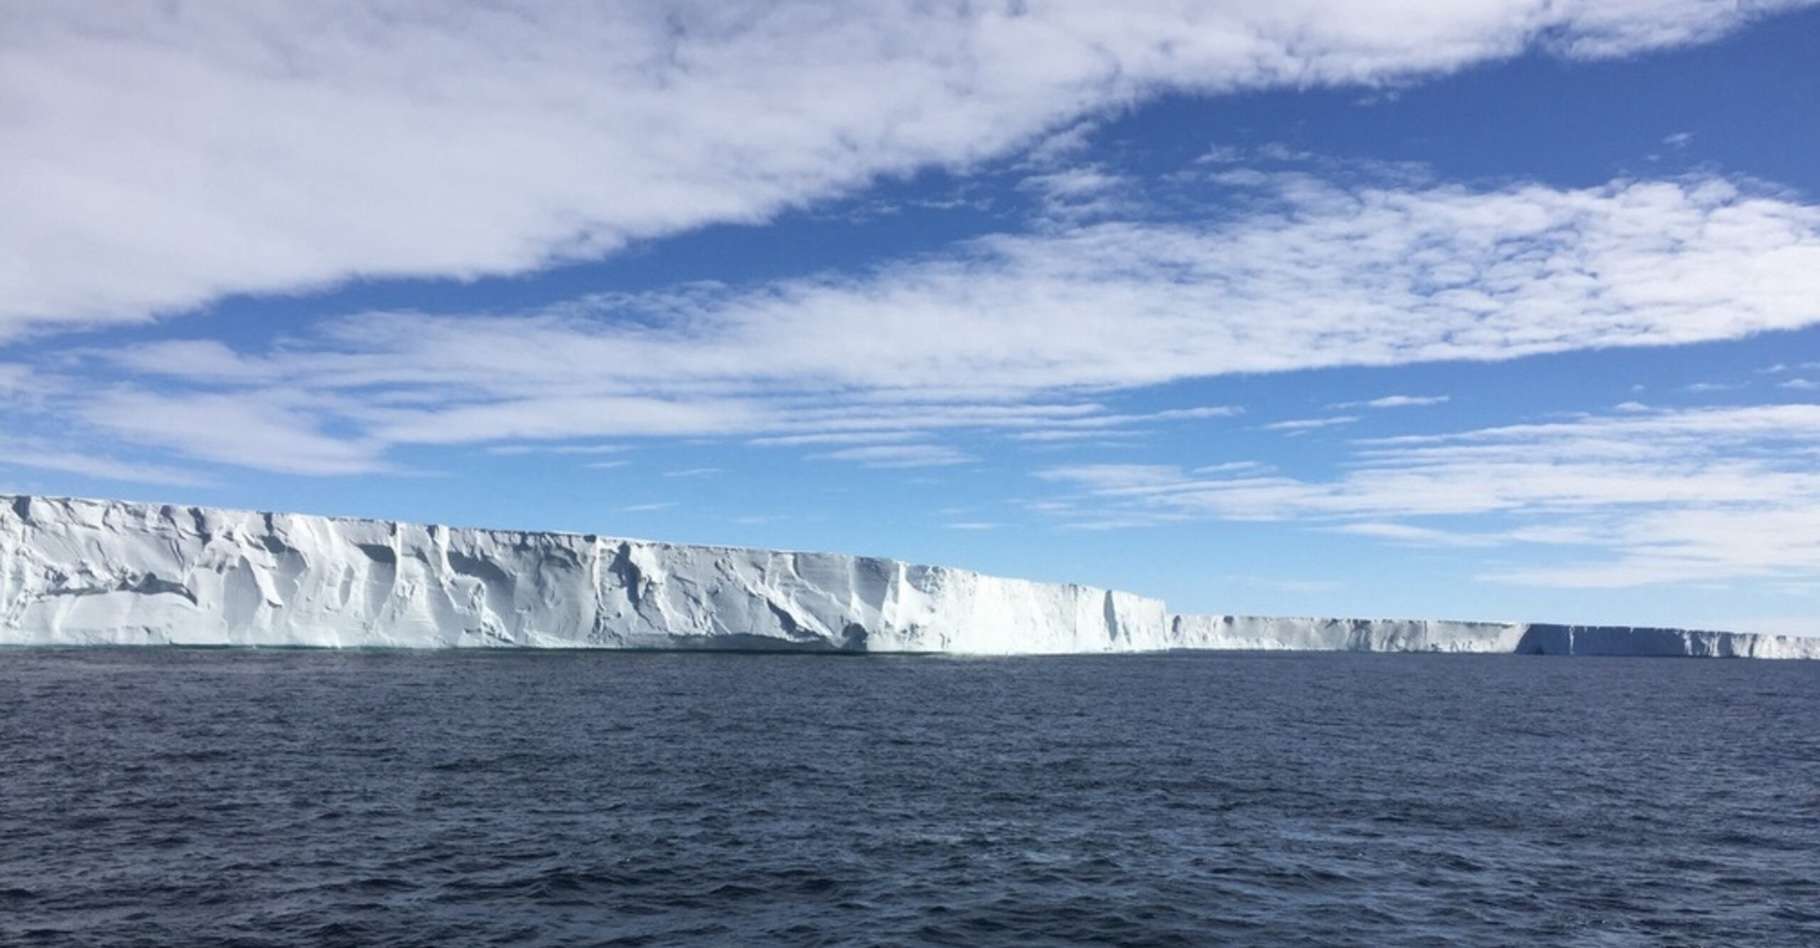 Il n’y a pas que les vents qui font fondre l’Antarctique